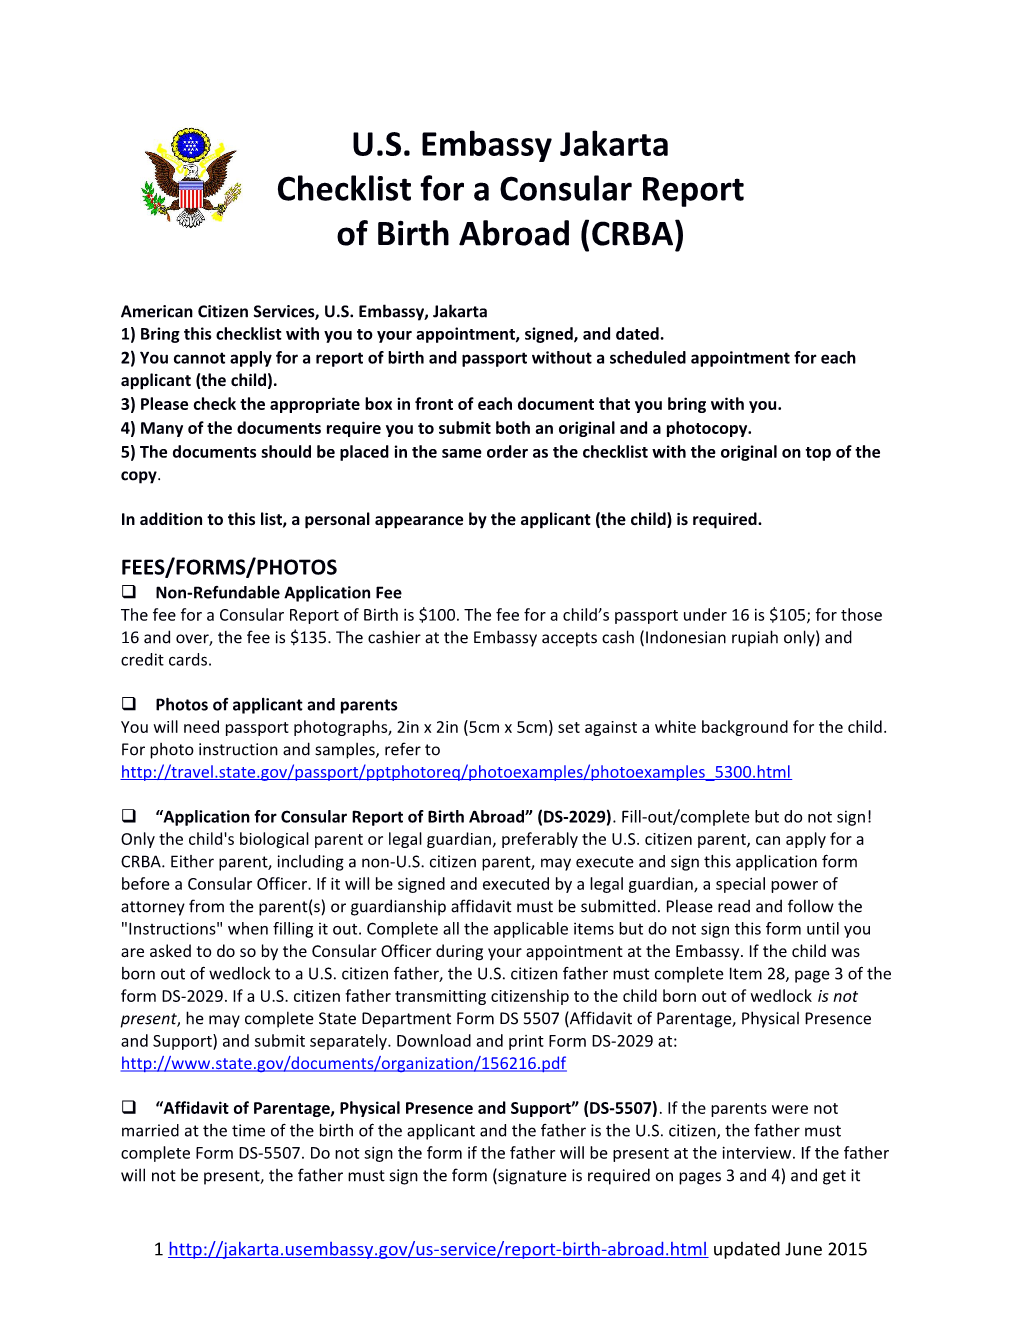 Checklist for a Consular Report